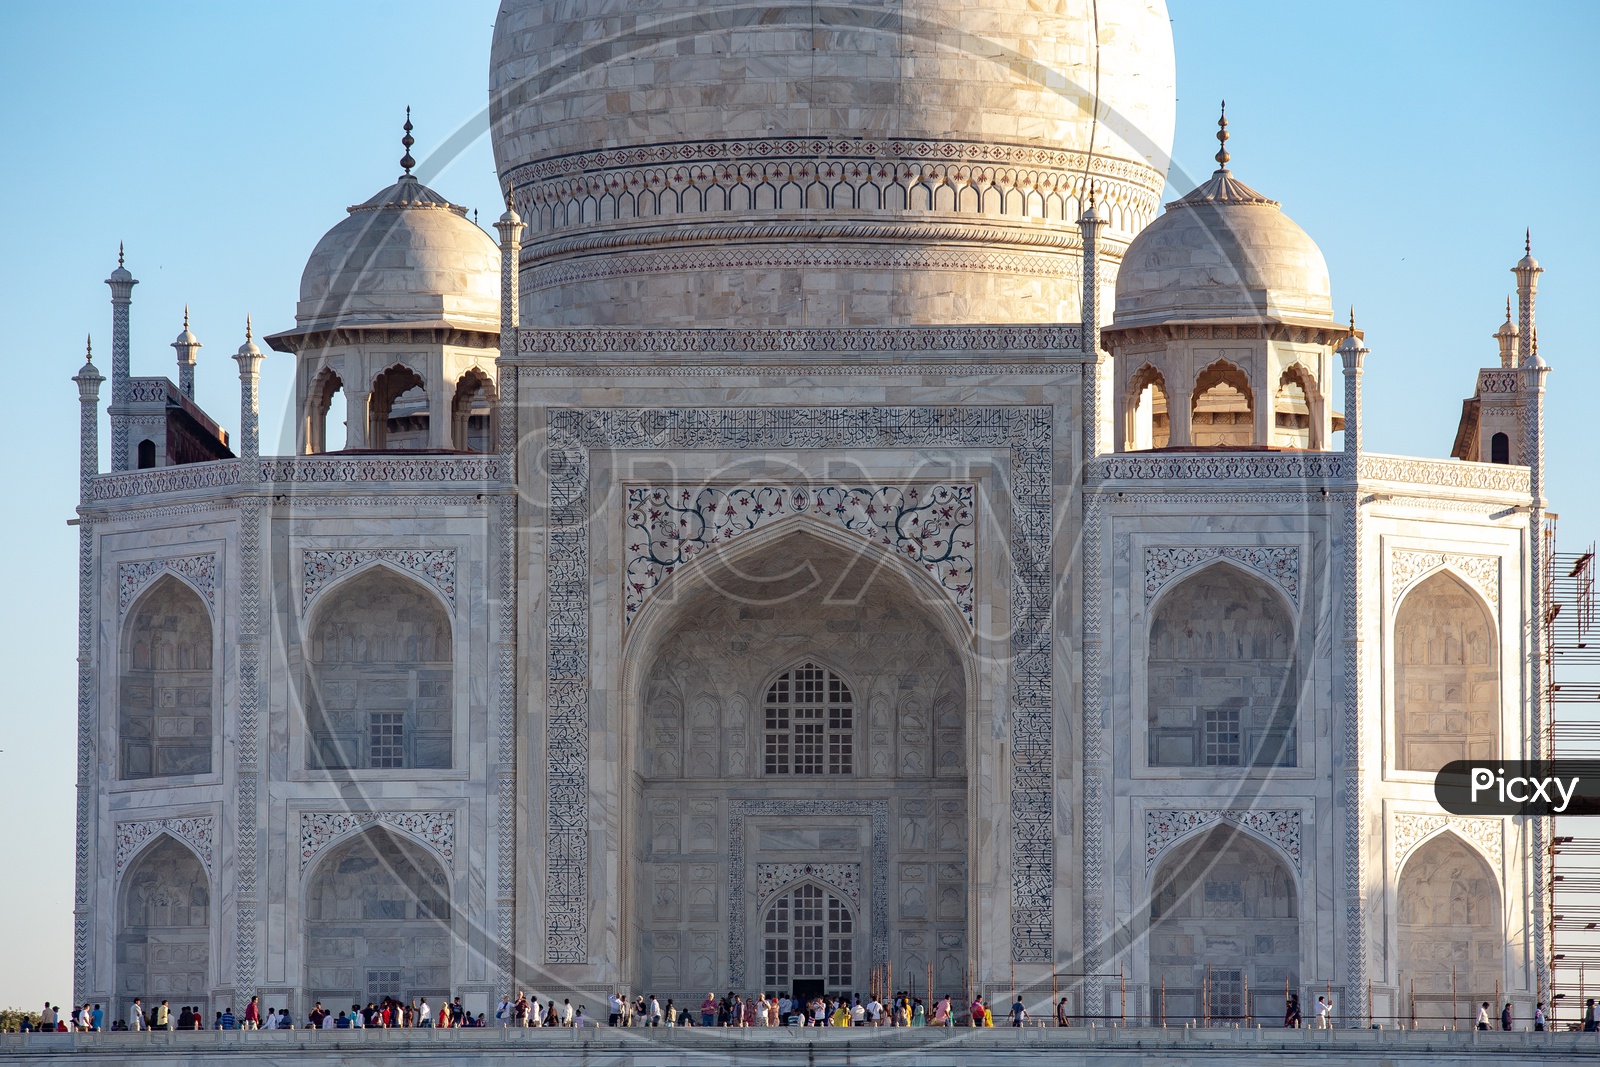 Taj Mahal - 7 wonders of the world